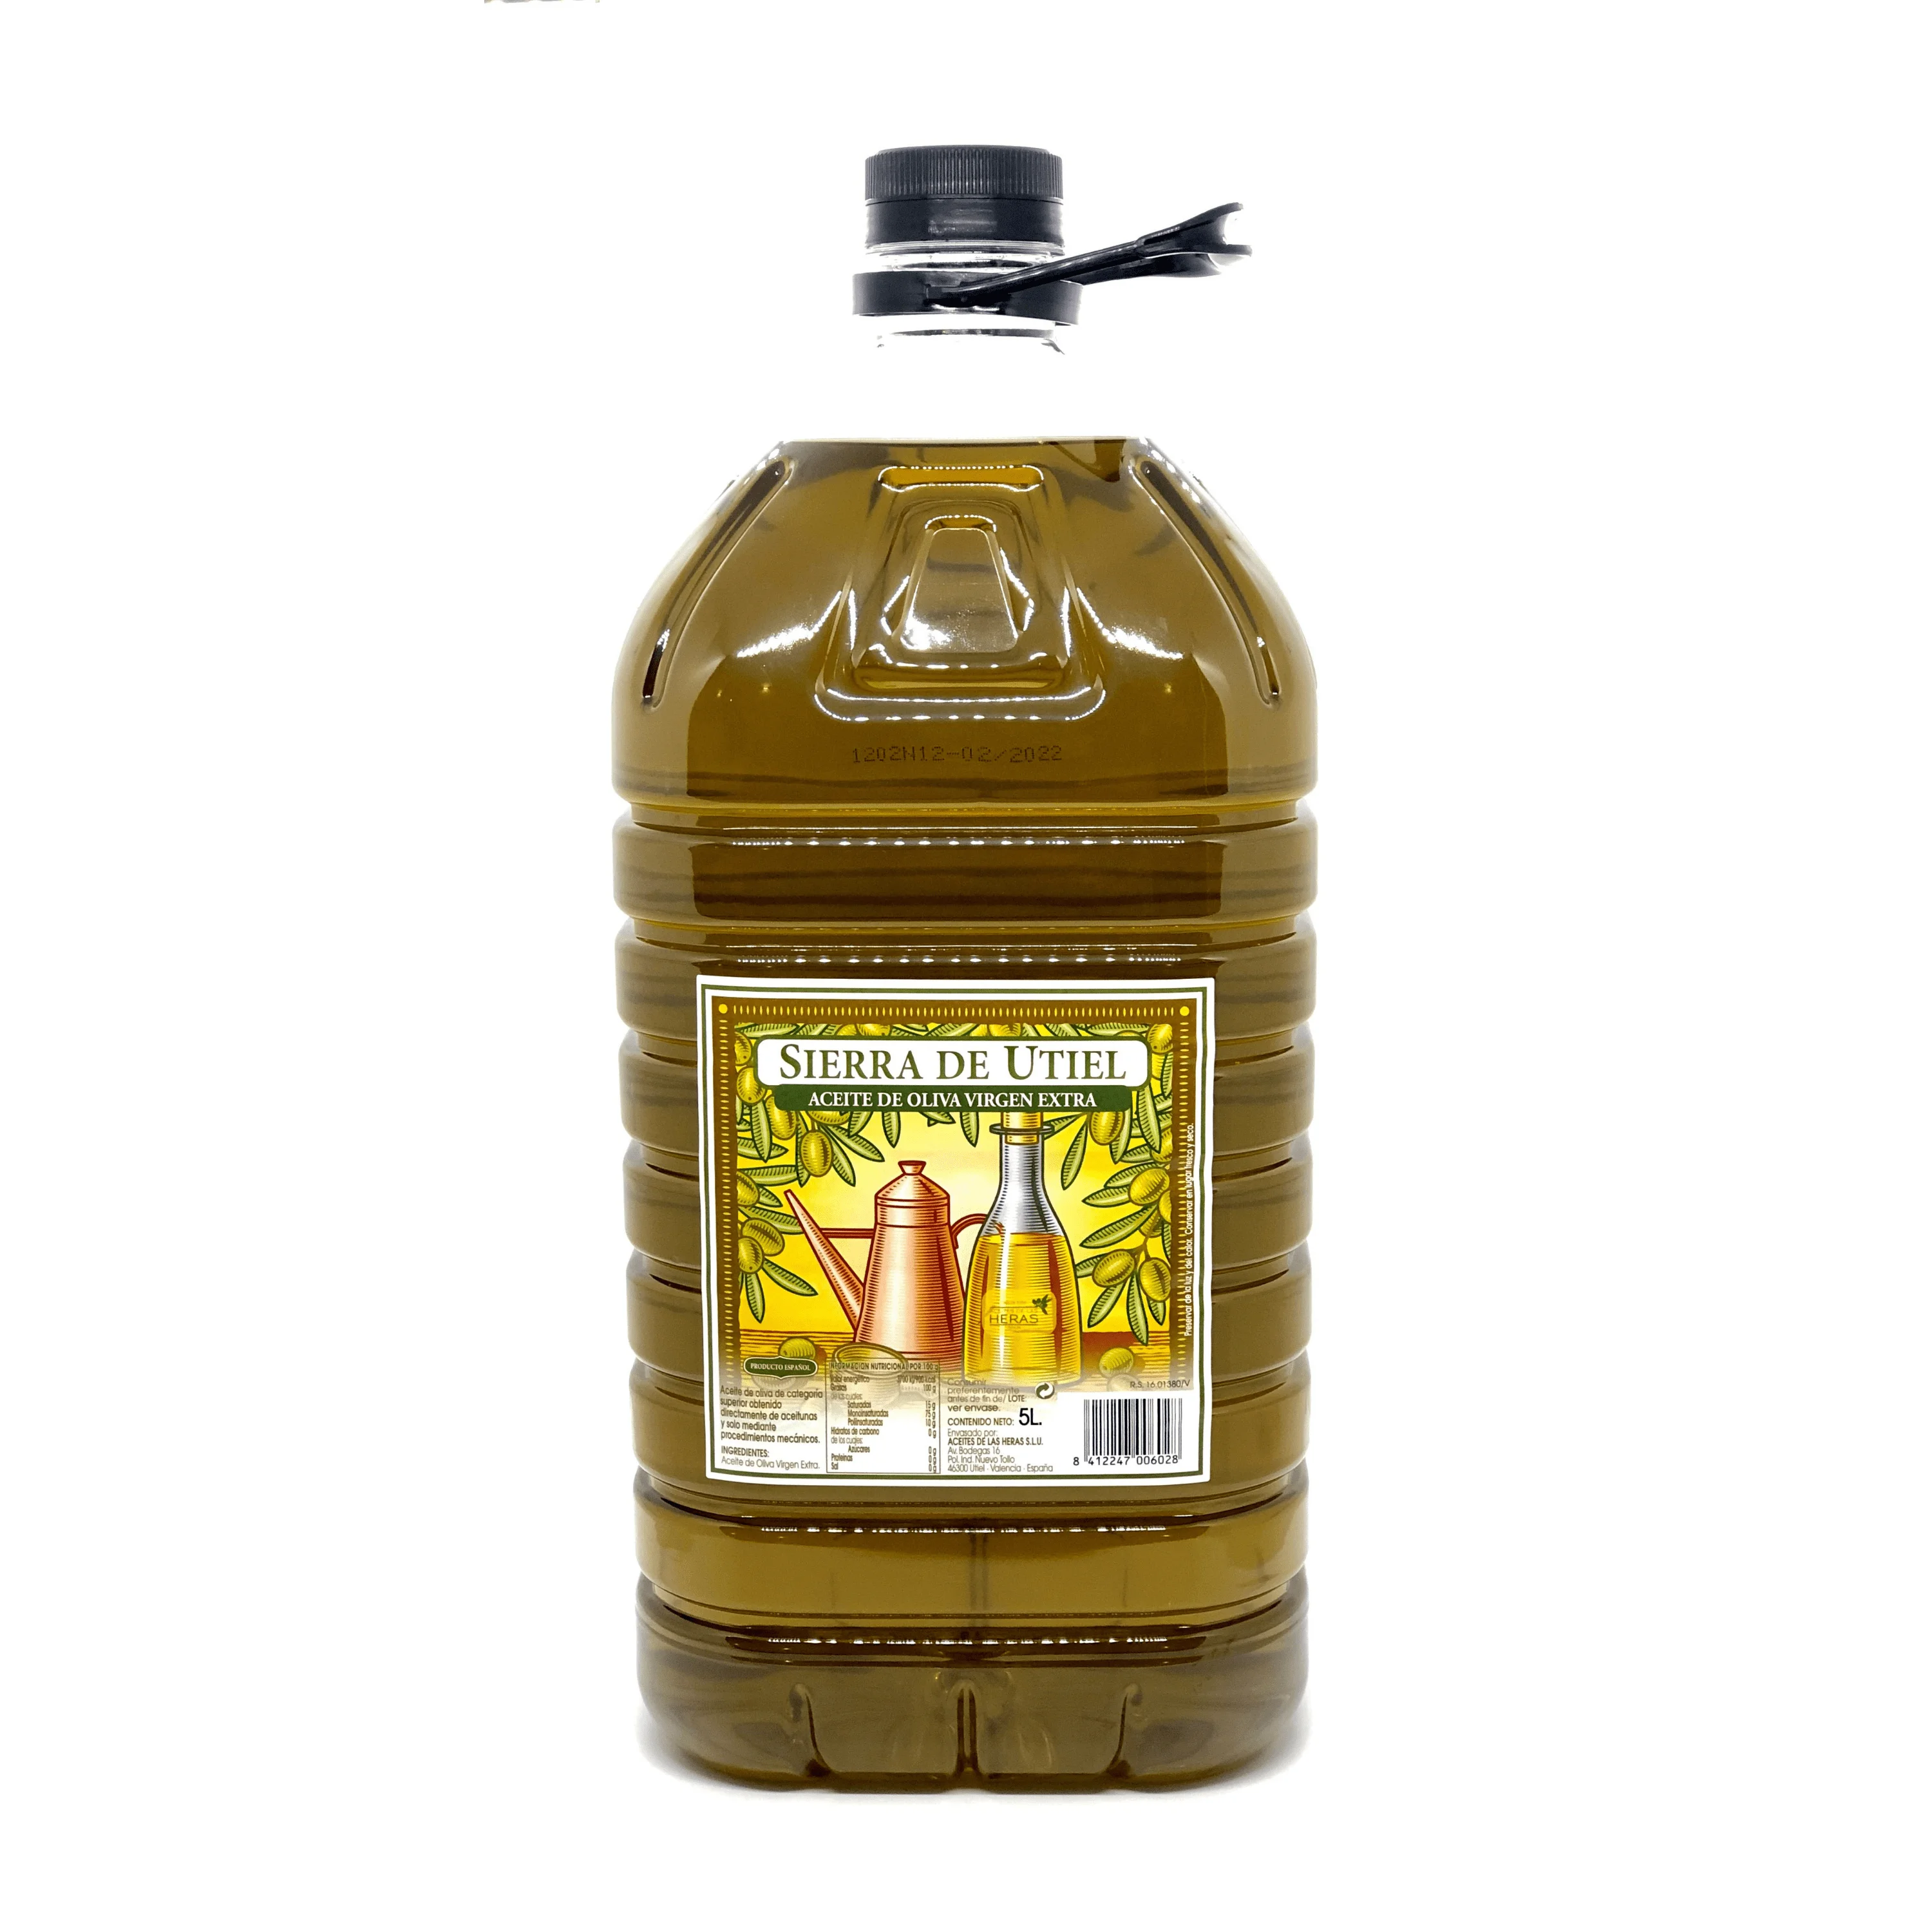 Extra Virgin Olive Oil 5L  Cold-Pressed & Unrefined Olive Oil